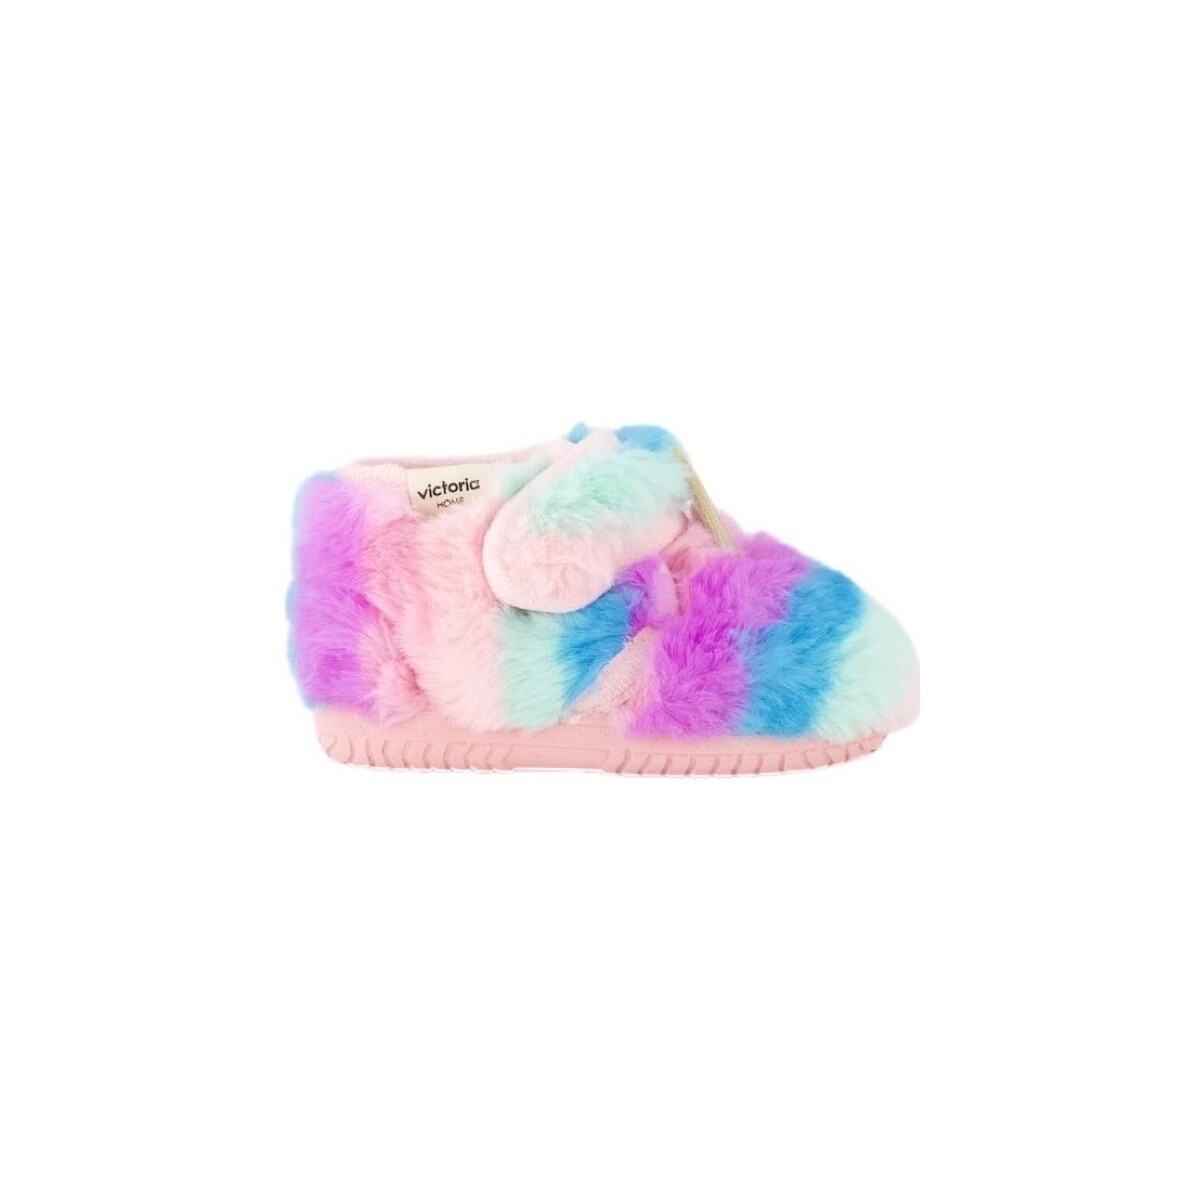 Victoria Multicolore Baby Shoes 051137 - Rosa Lp1rvUDR